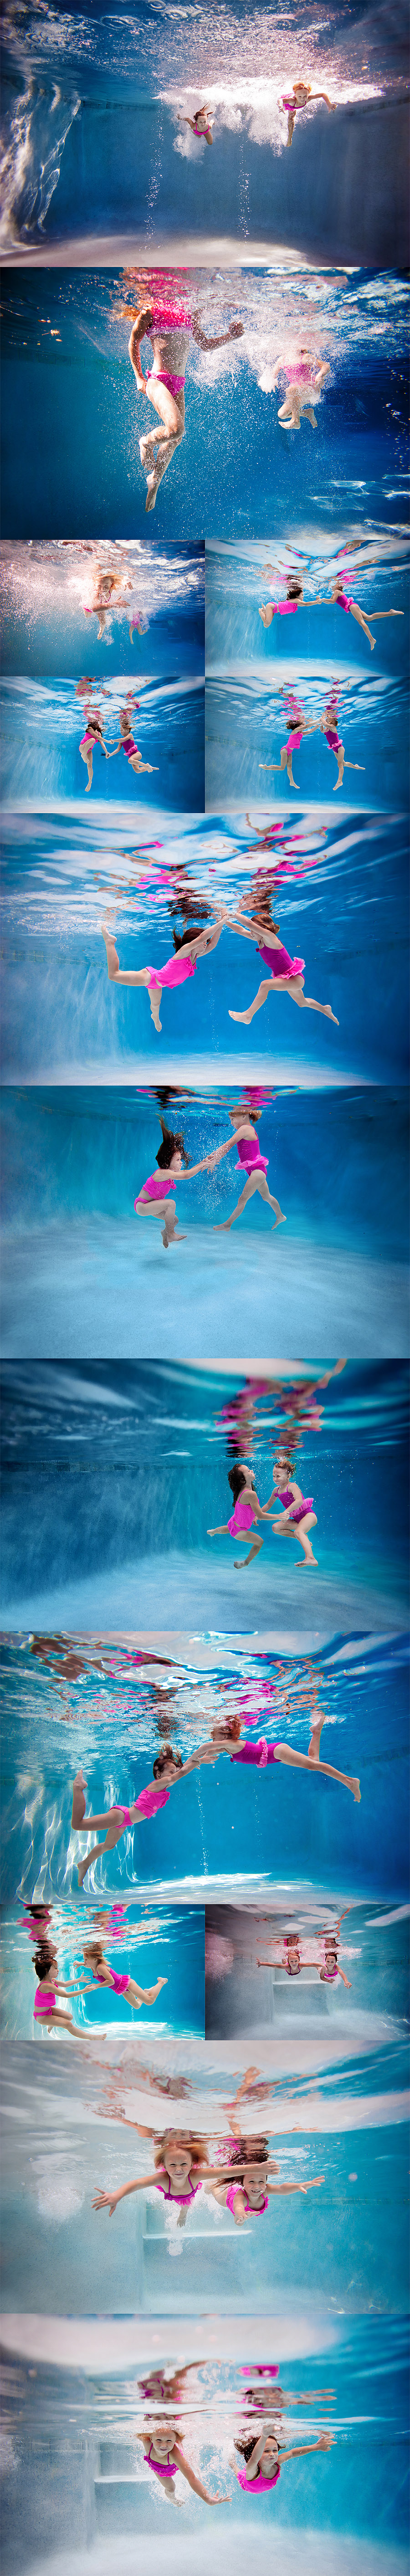 Underwater Kids Photographer Texas